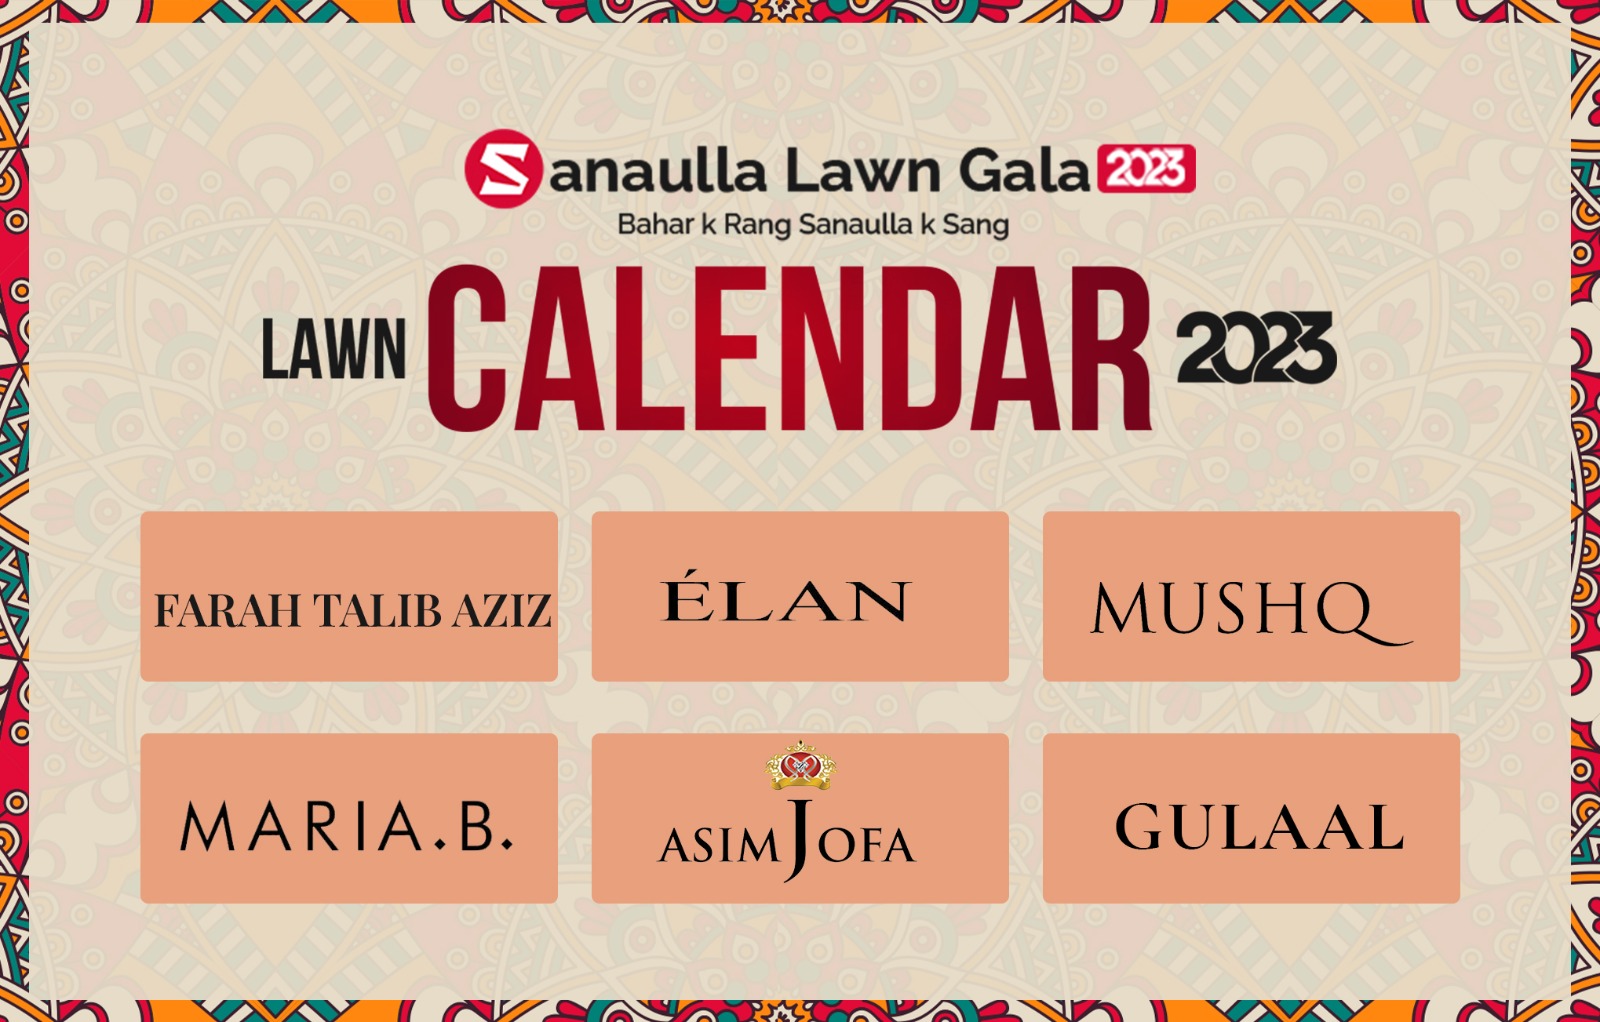 Lawn Calendar 2023